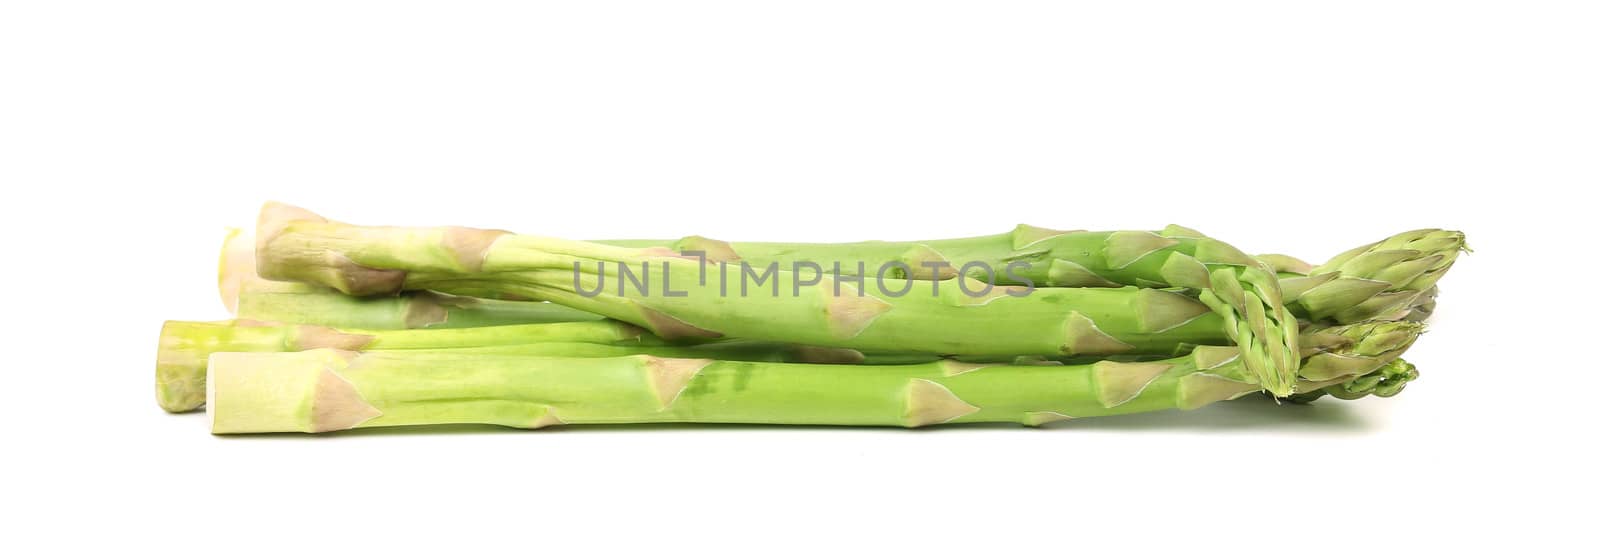 Bunch of asparagus. by indigolotos